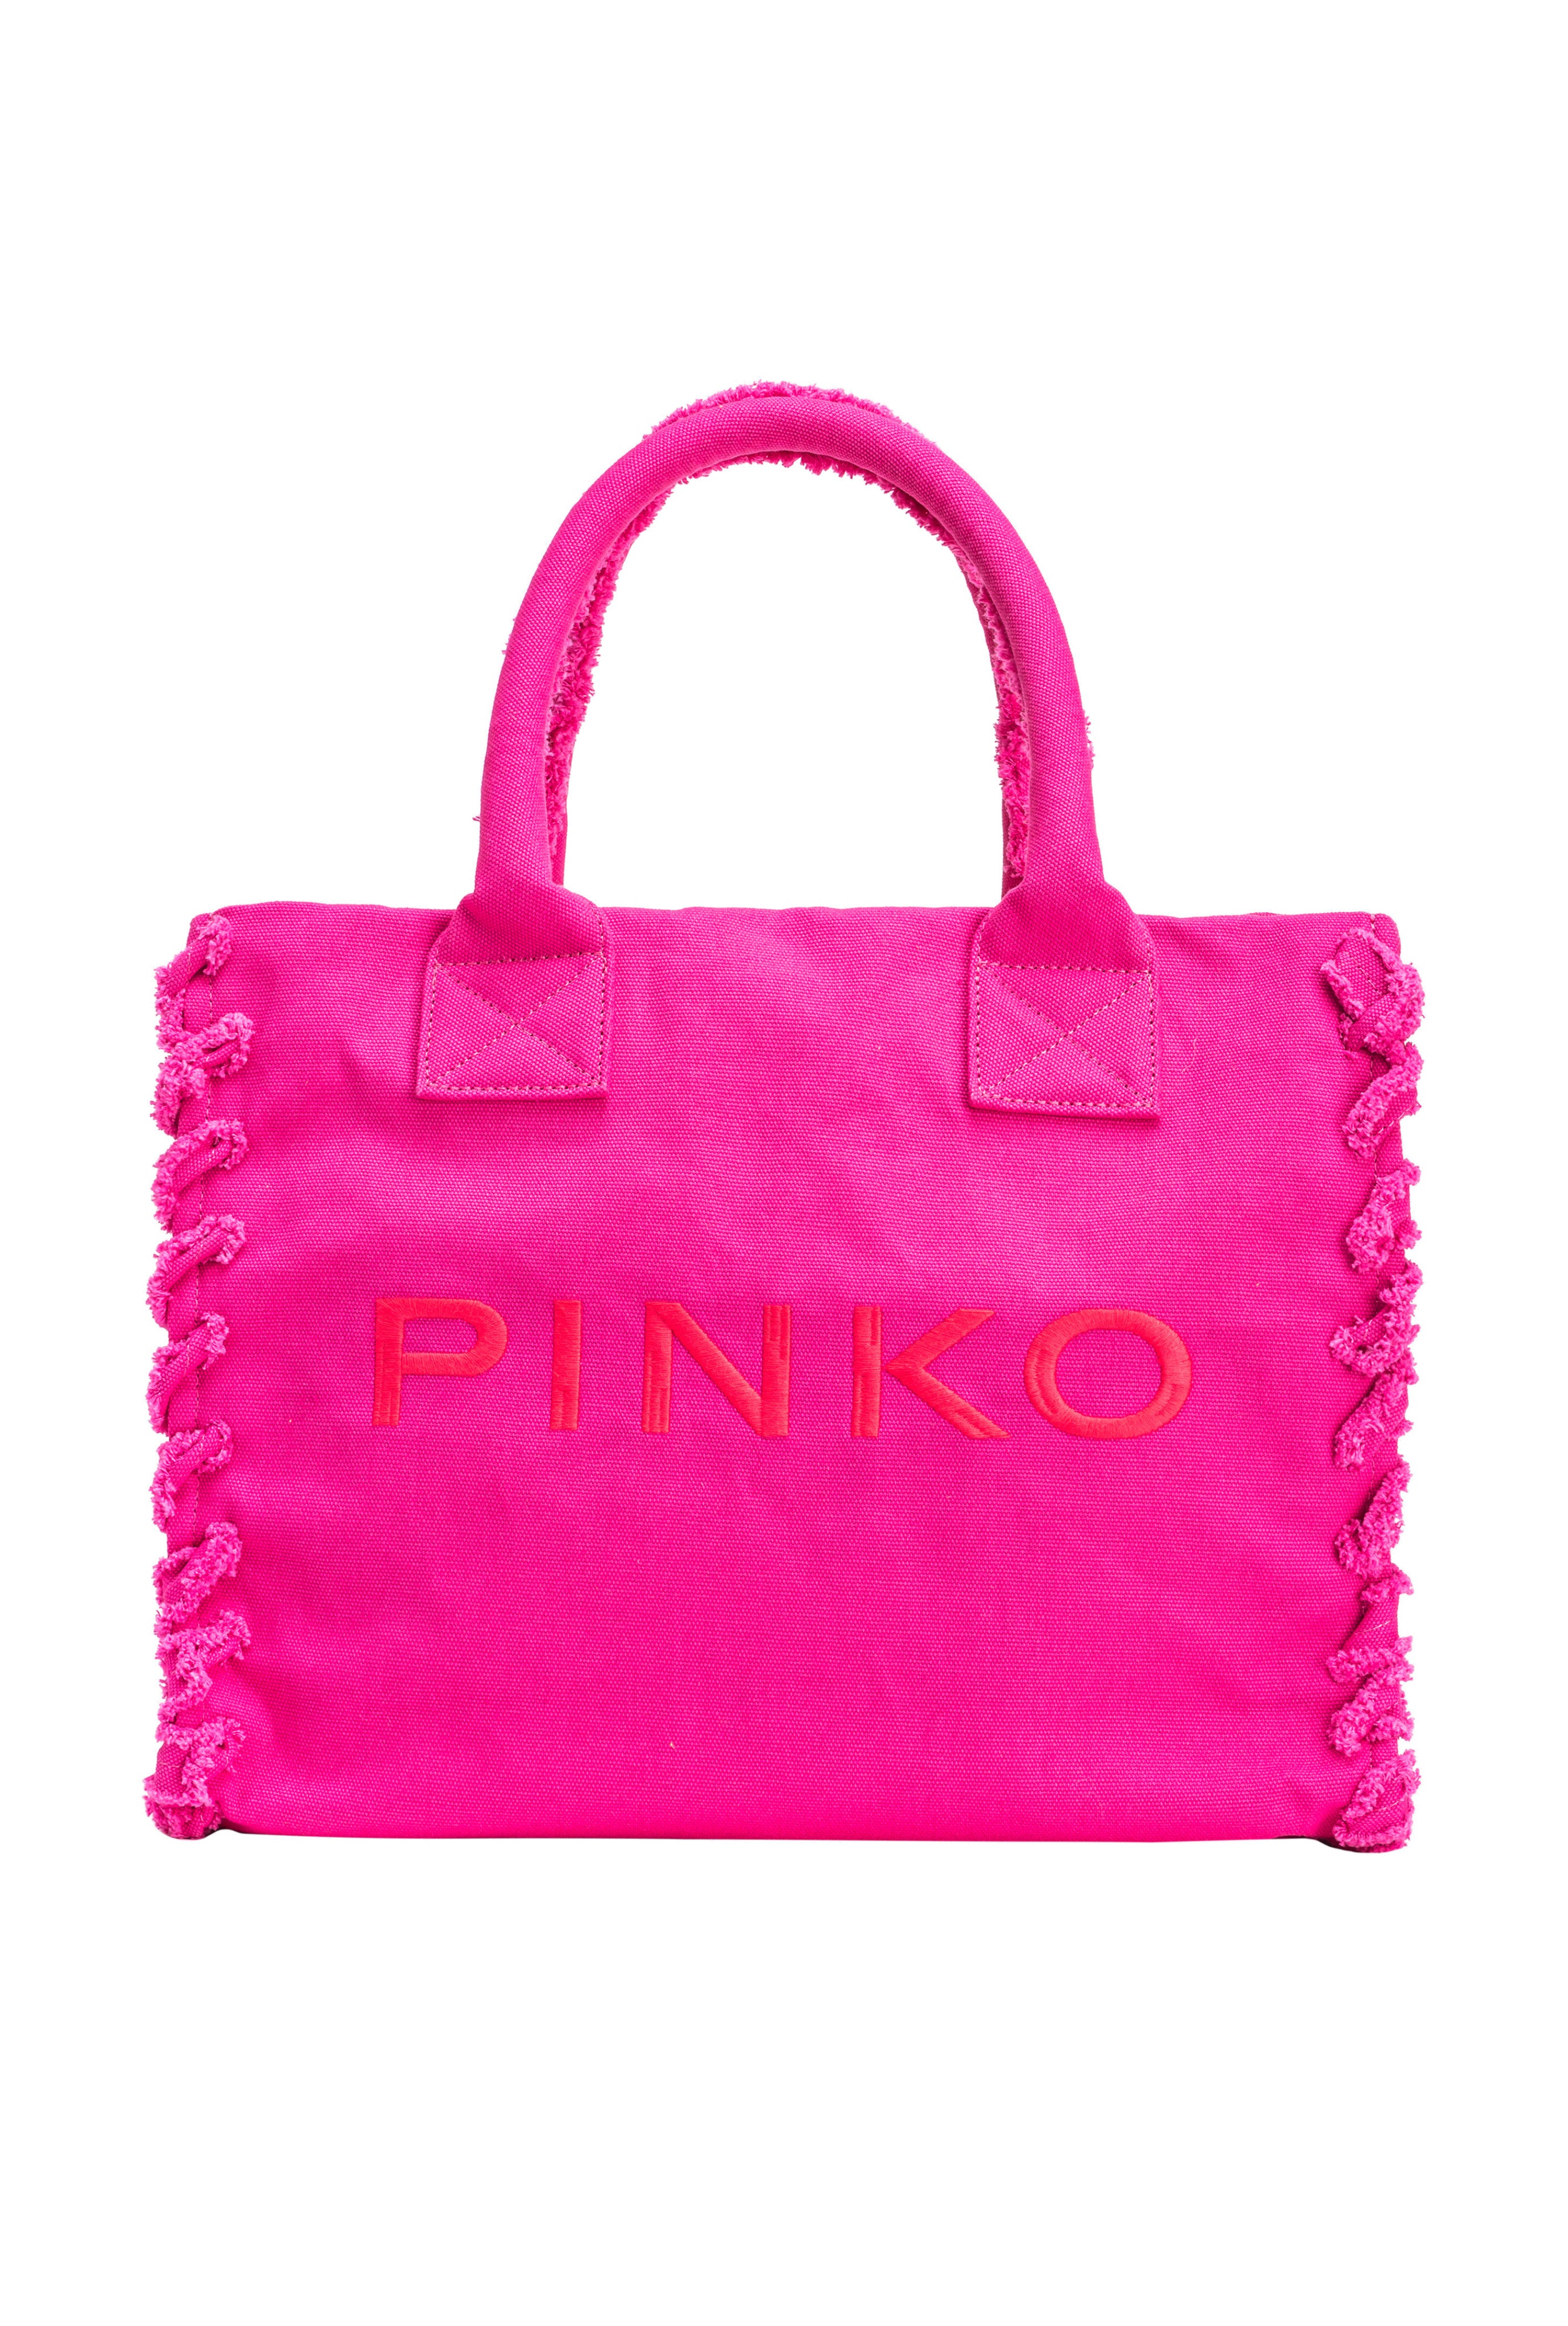 PINKO Shopper Beach Canvas-Pink